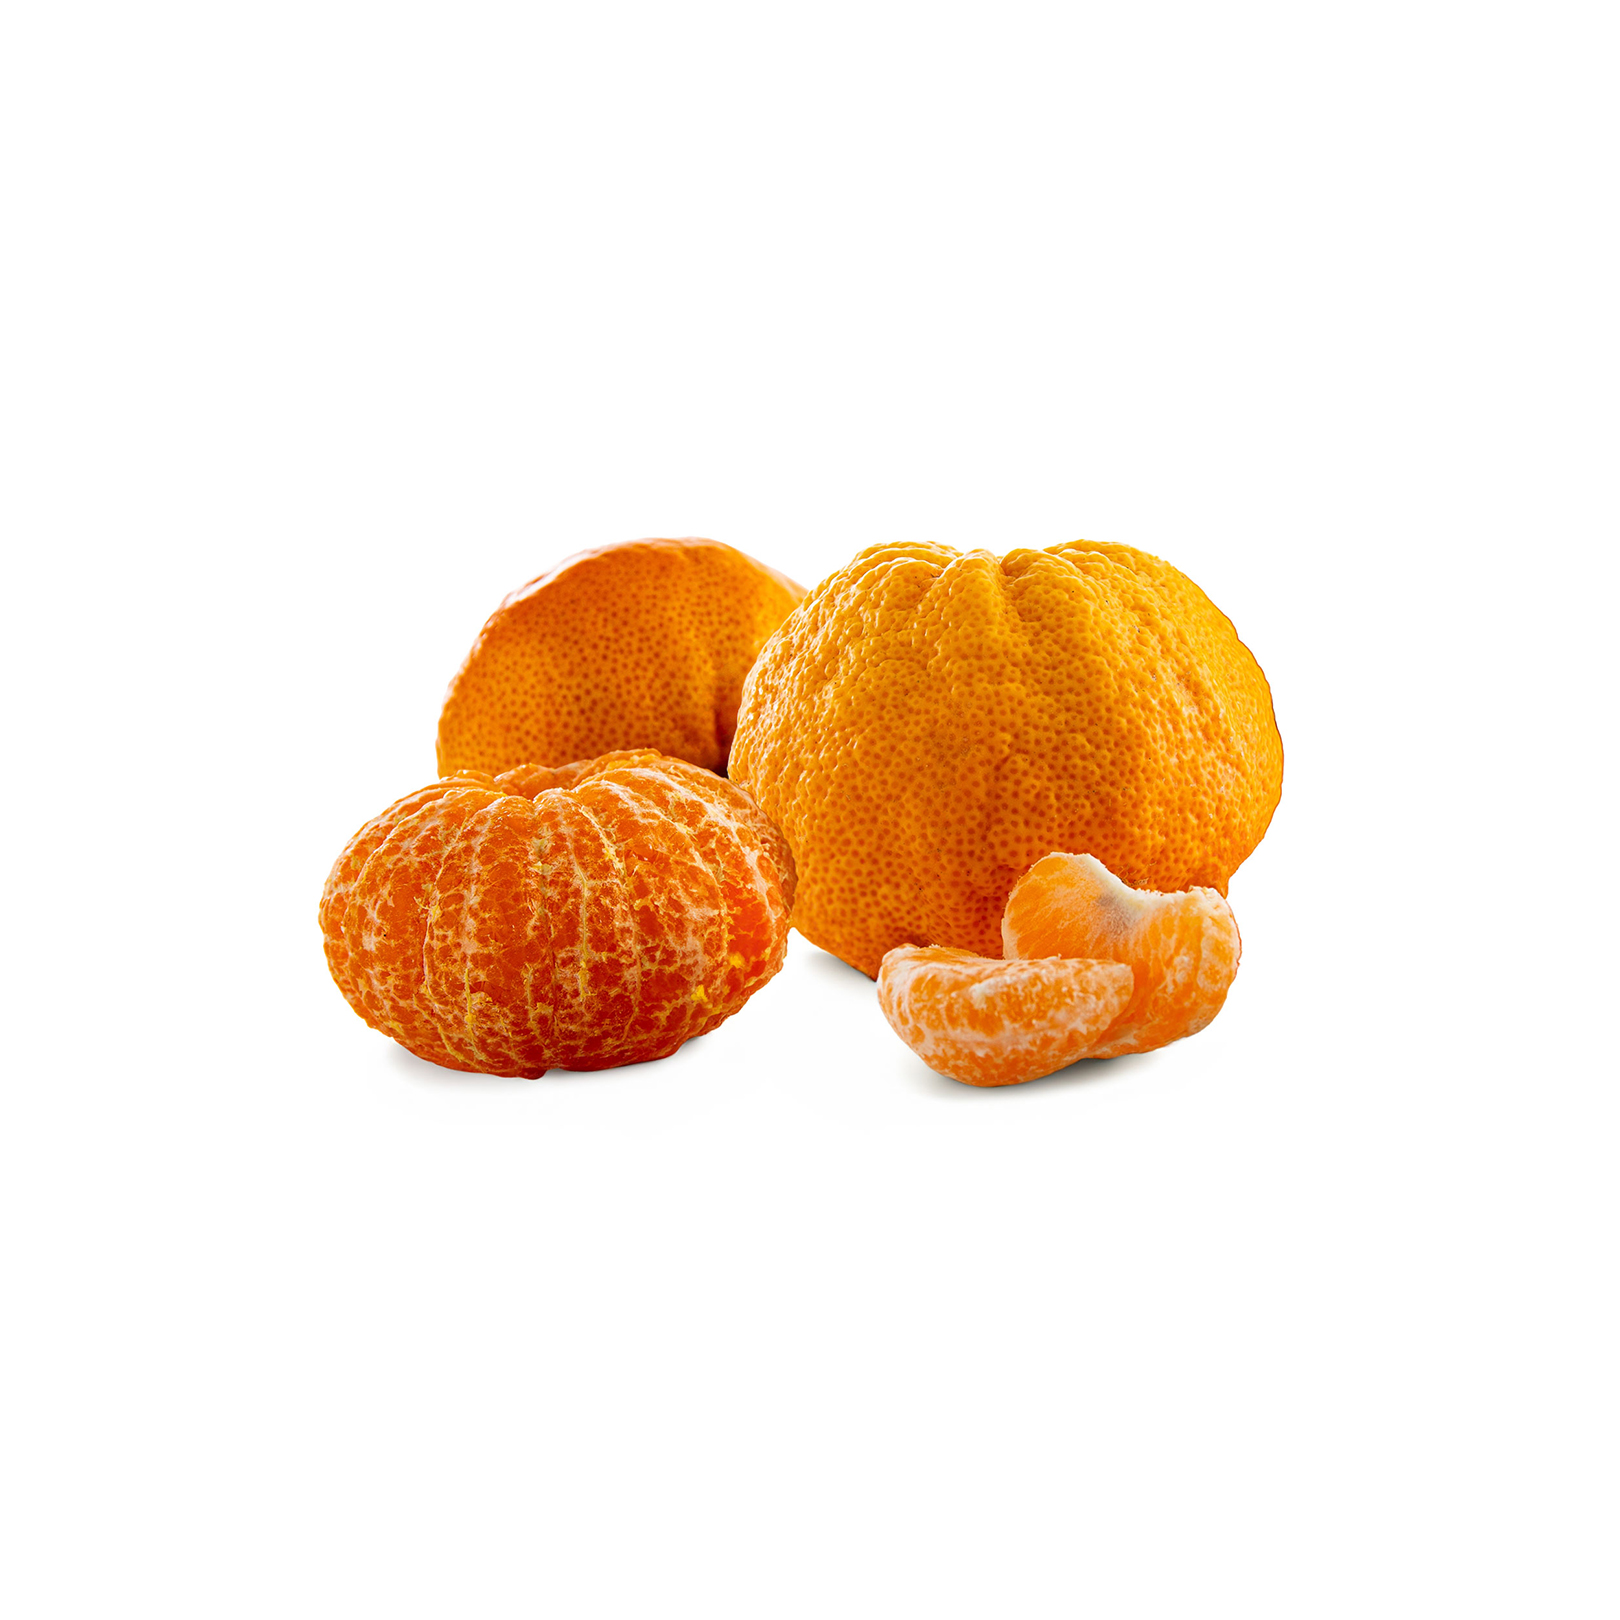 Buy Ugli Fruit Mandarin Online NZ - Twisted Citrus